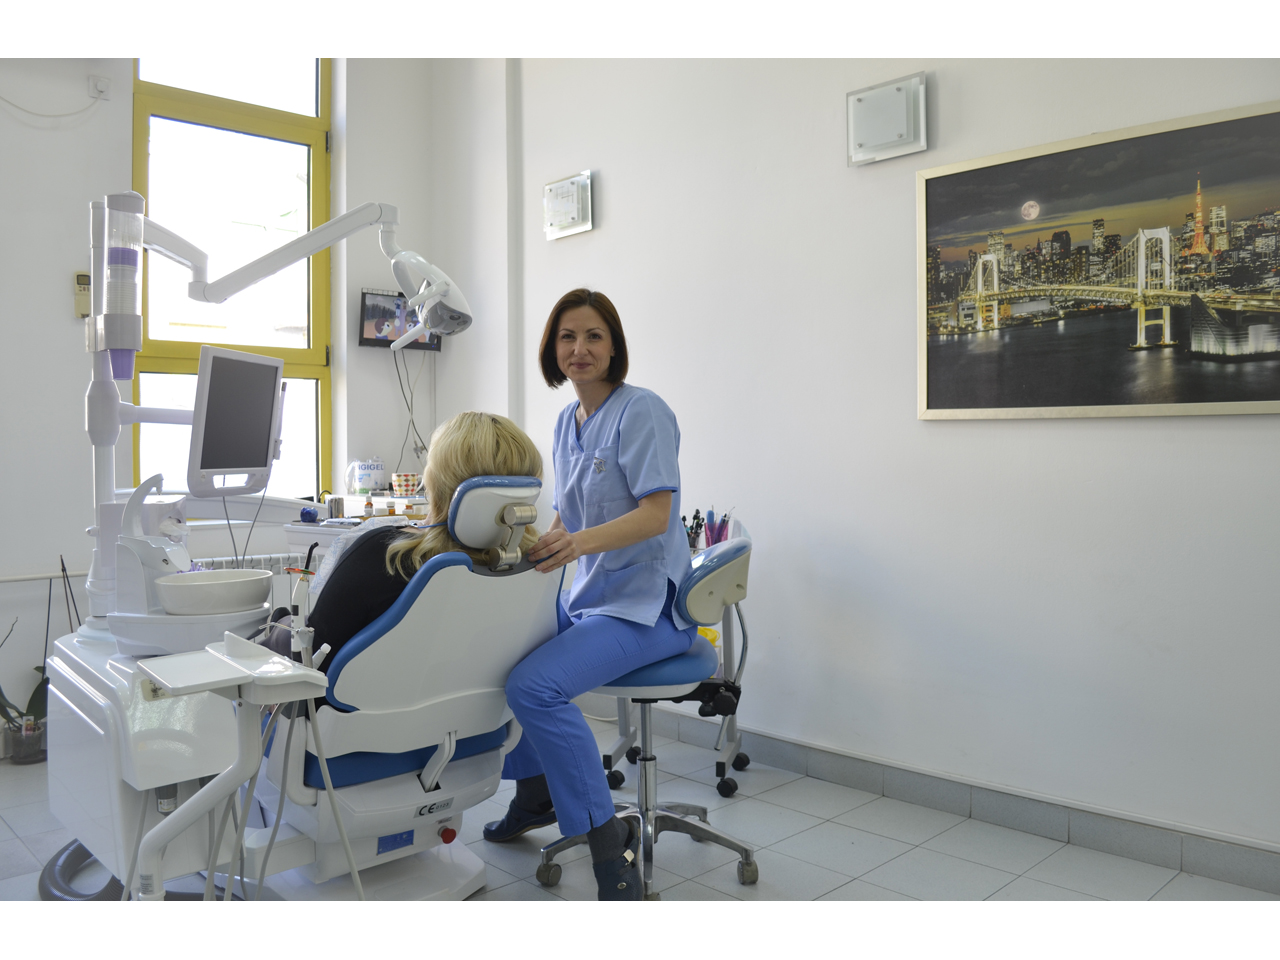 DR JELENA KRATOHVIL DENTAL OFFICE Dental orthotics Belgrade - Photo 3